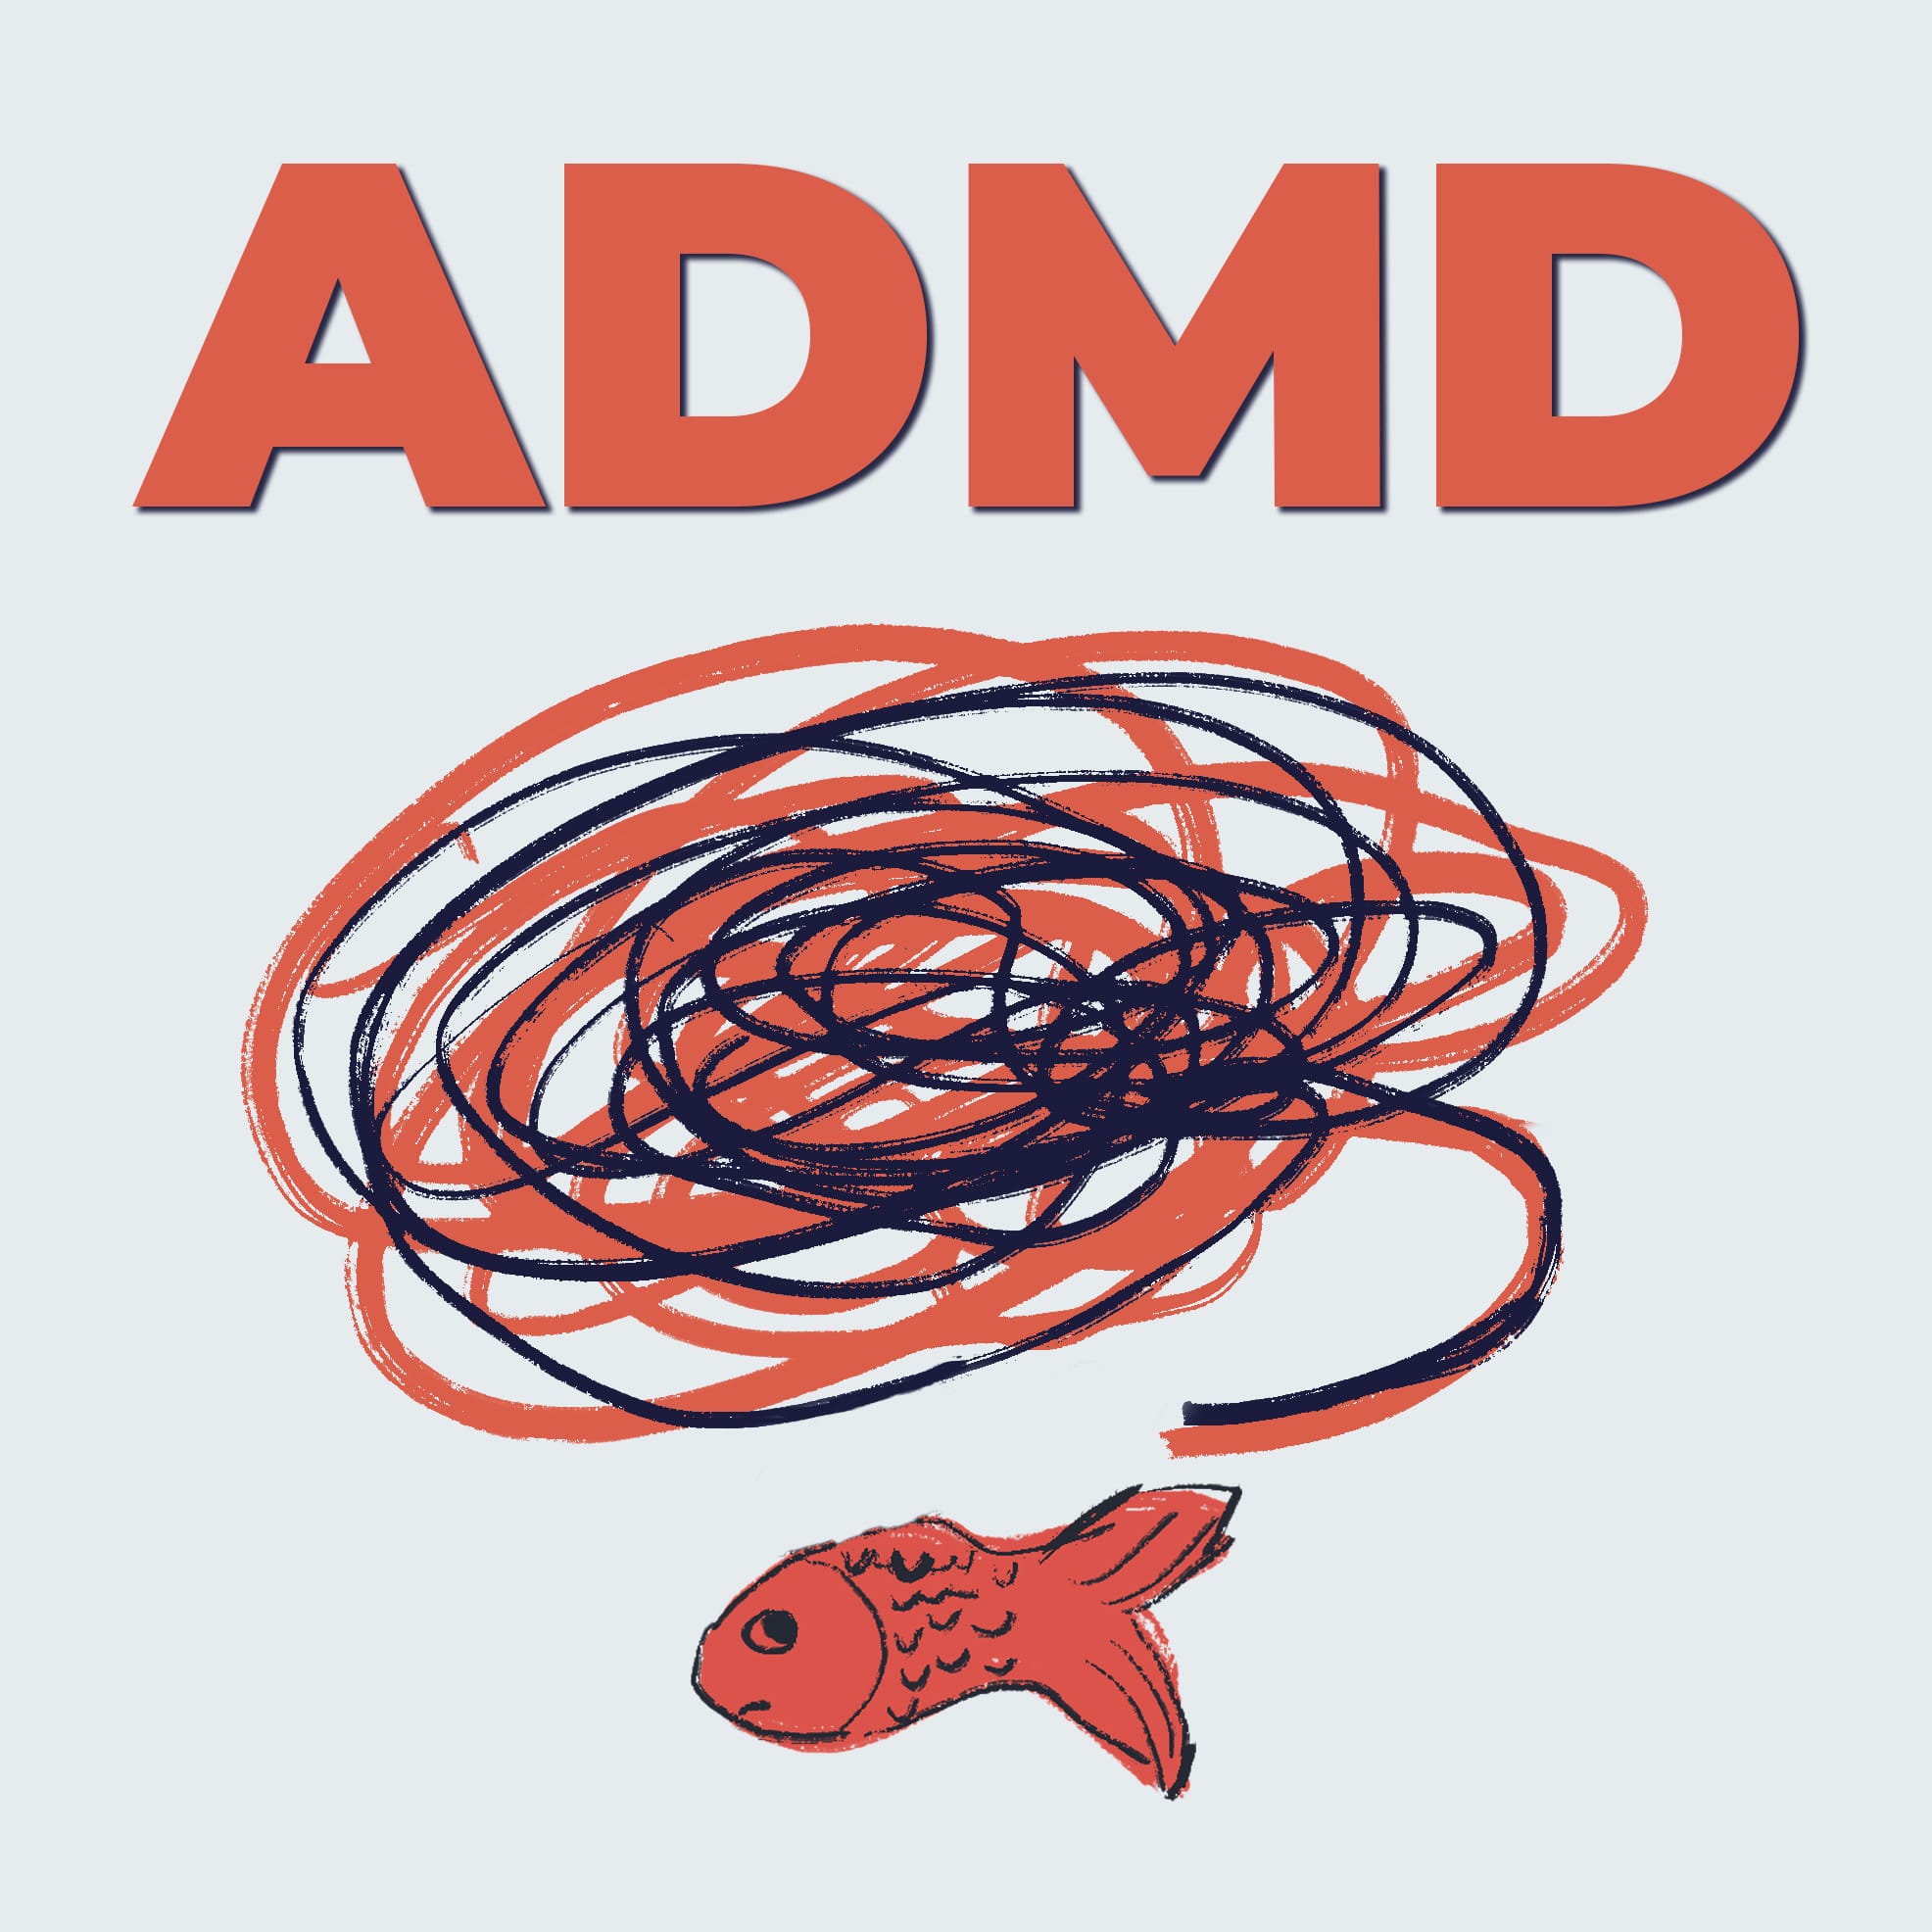 Attention Deficit Marketing Disorder (ADMD)